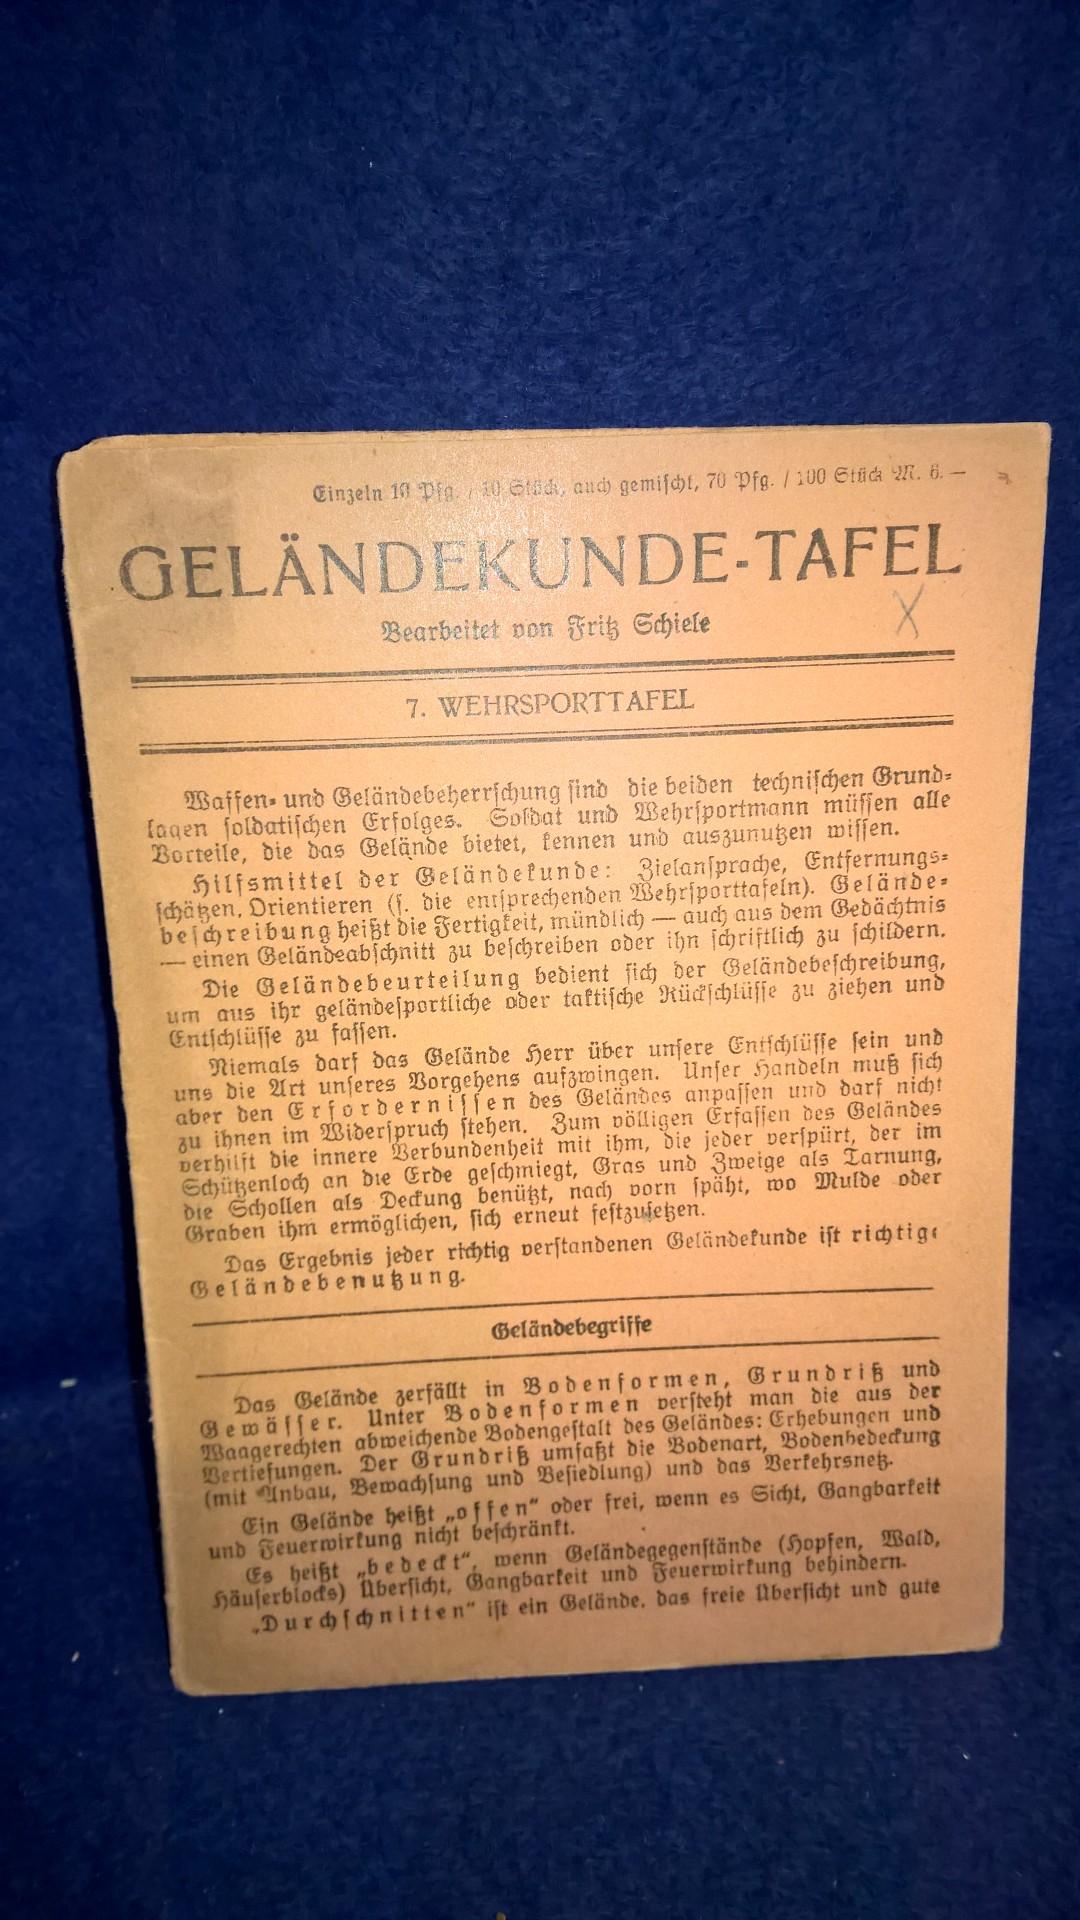 Geländekunde-Tafel.